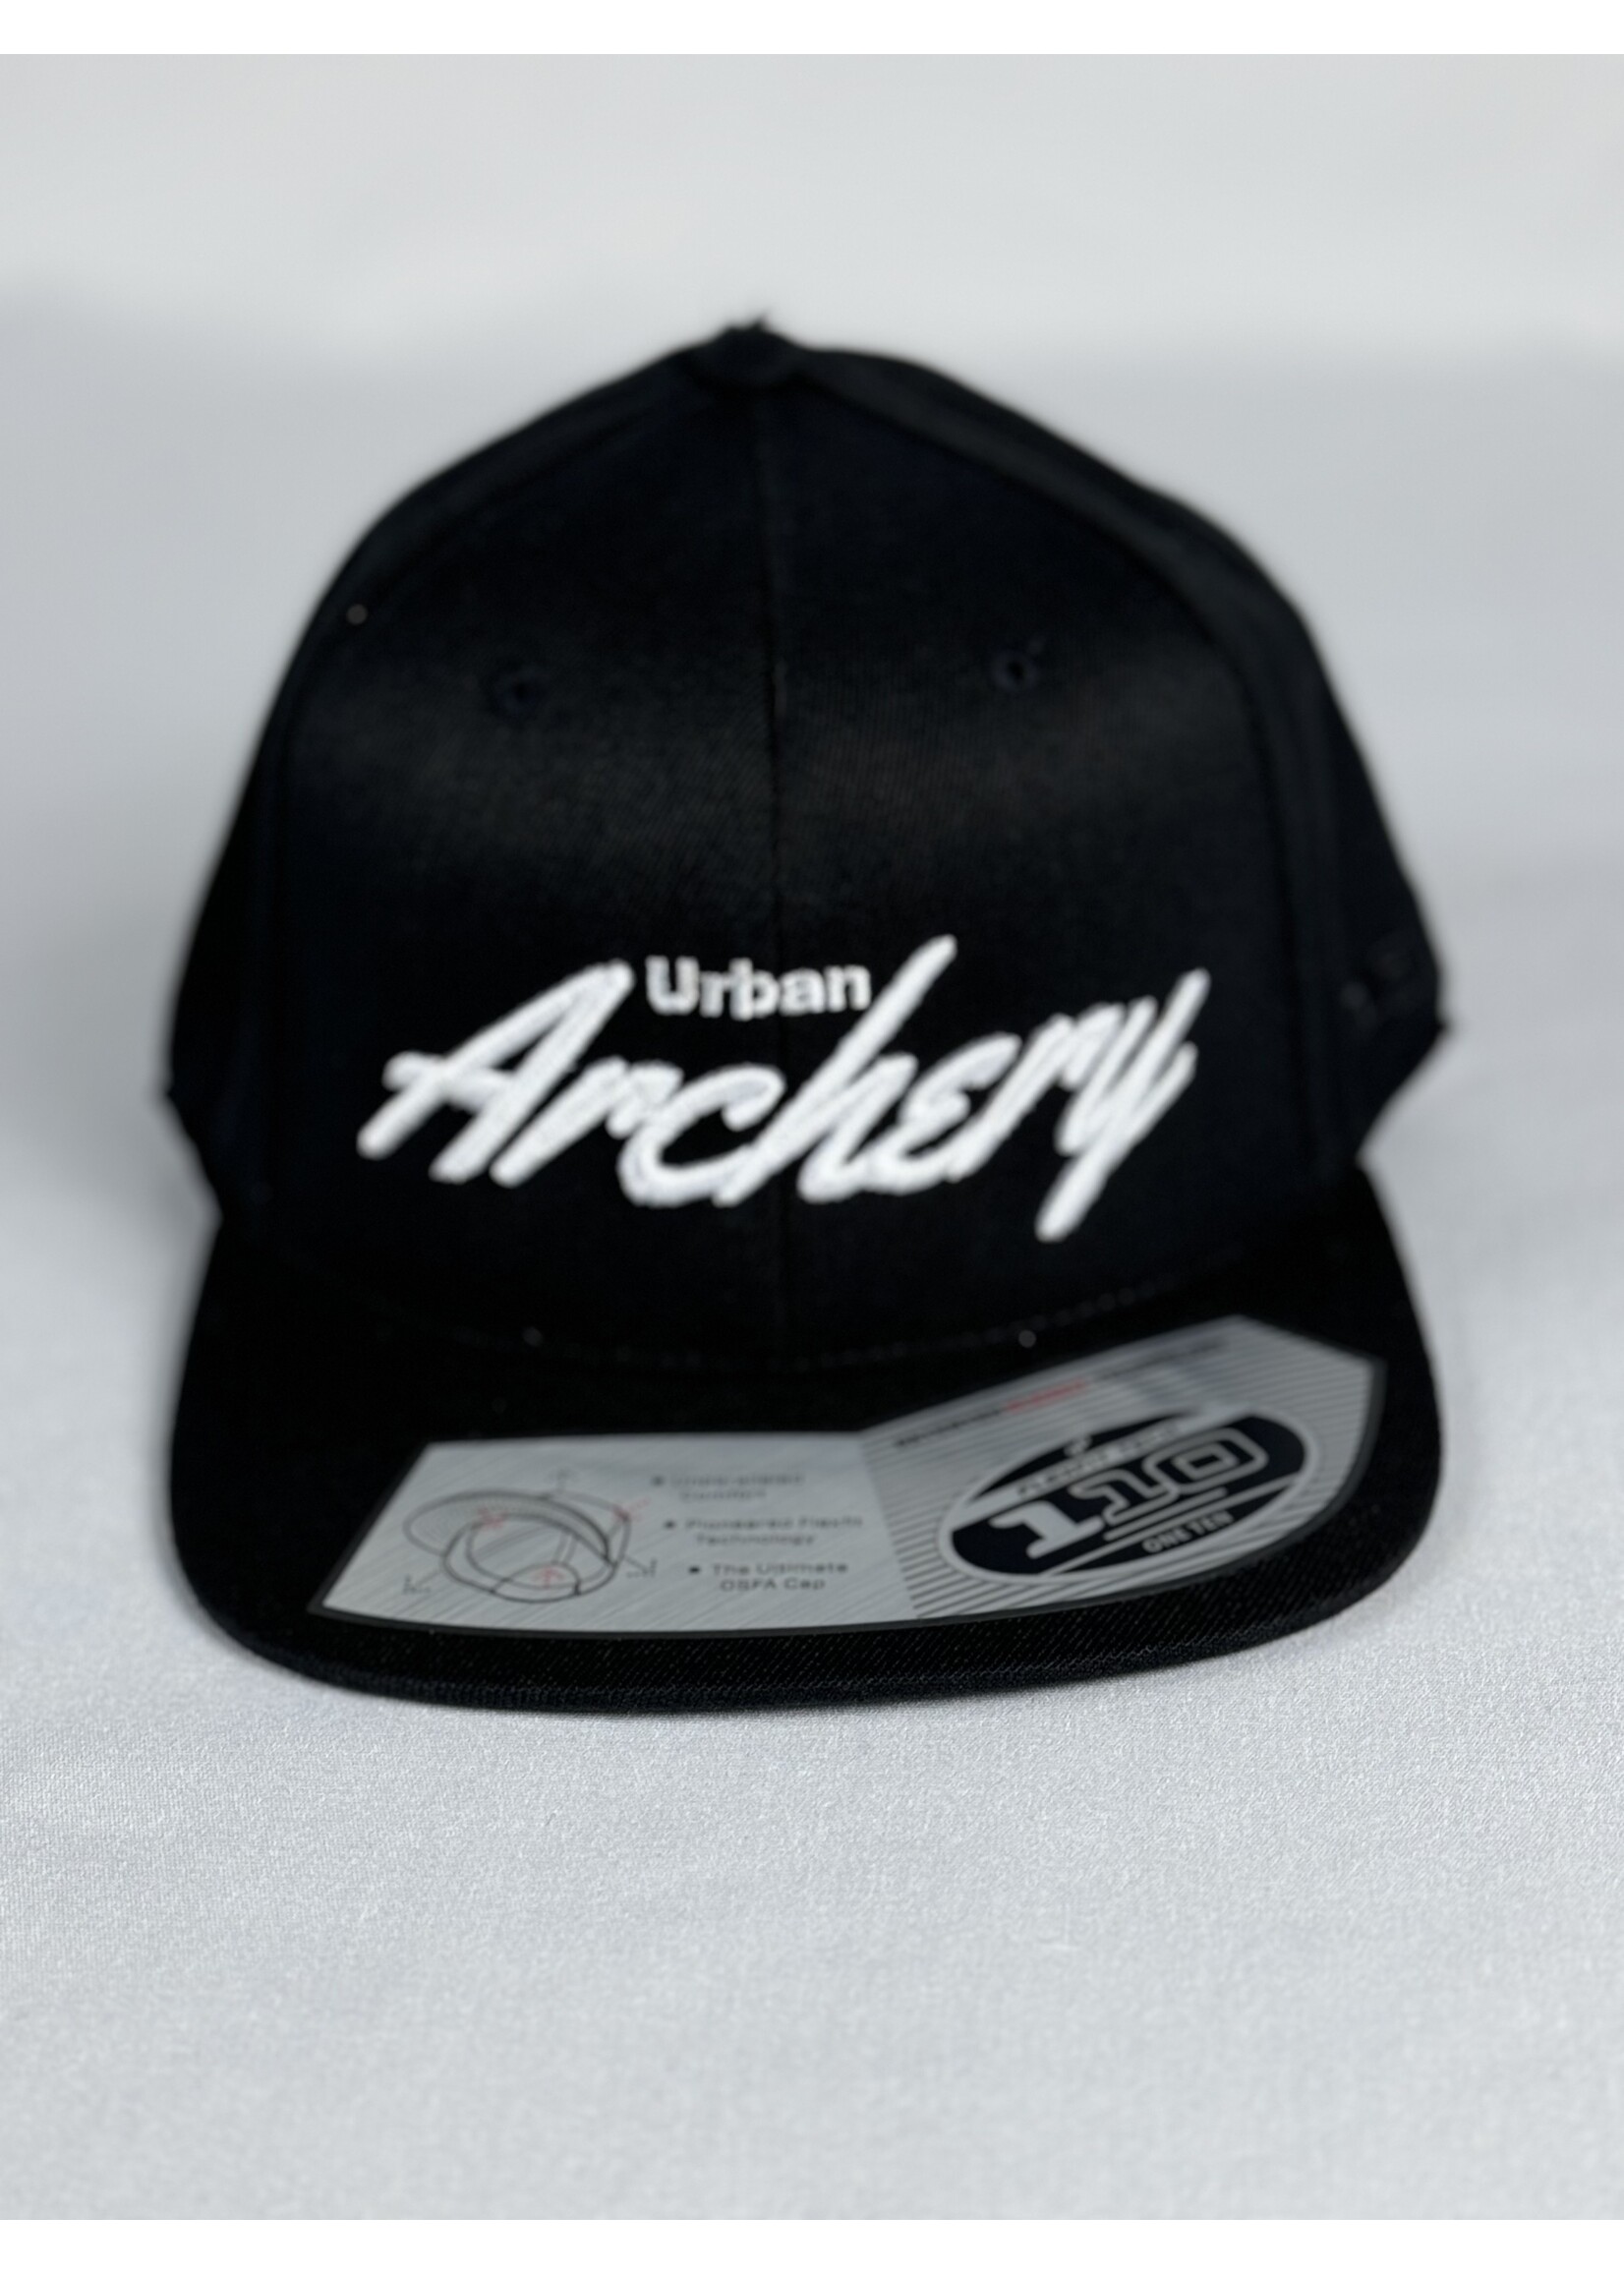 Urban Archery Urban Script Cap